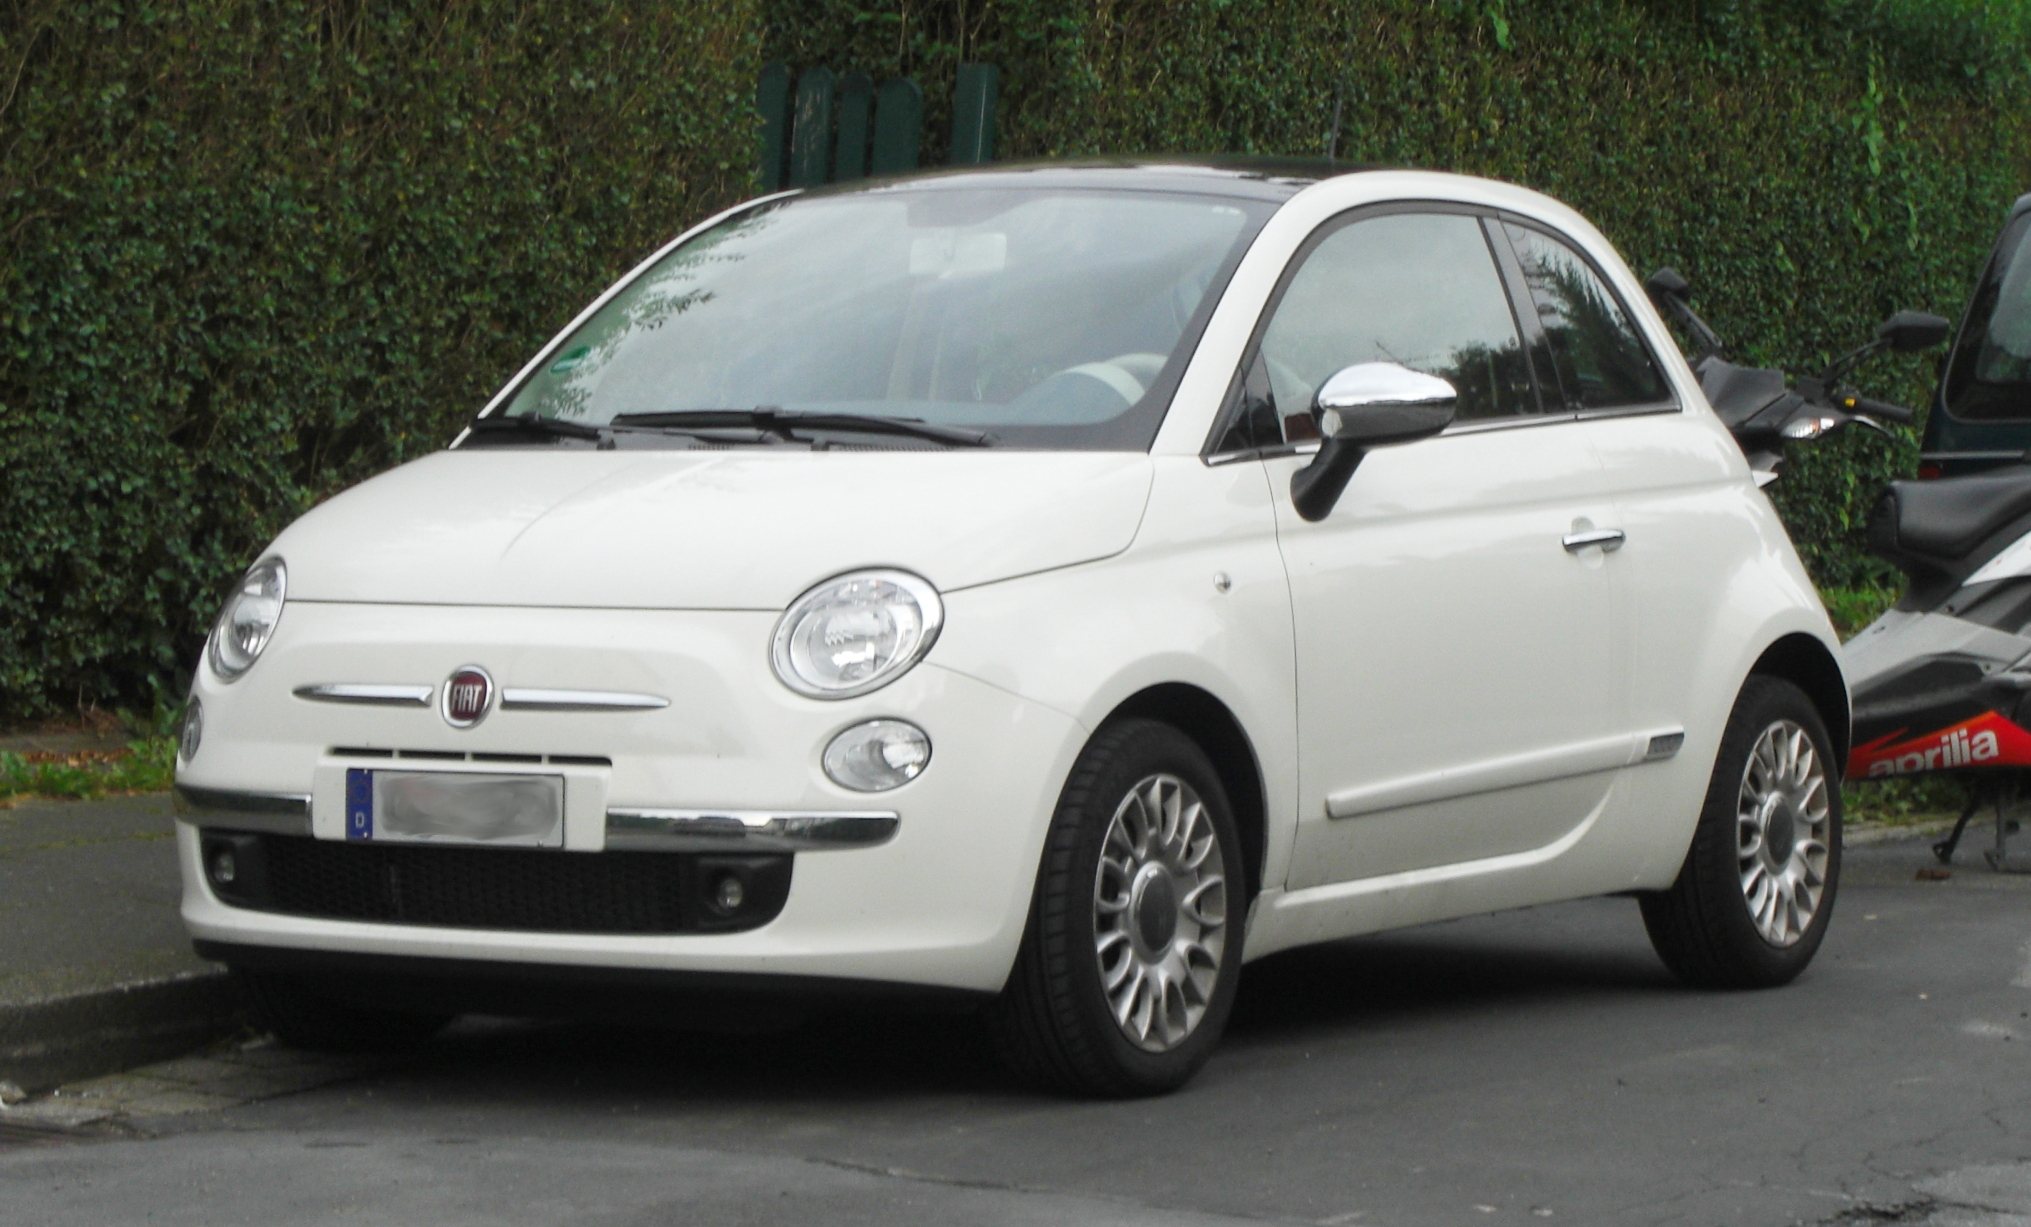 File:Fiat 500 front-1.jpg - Wikimedia Commons